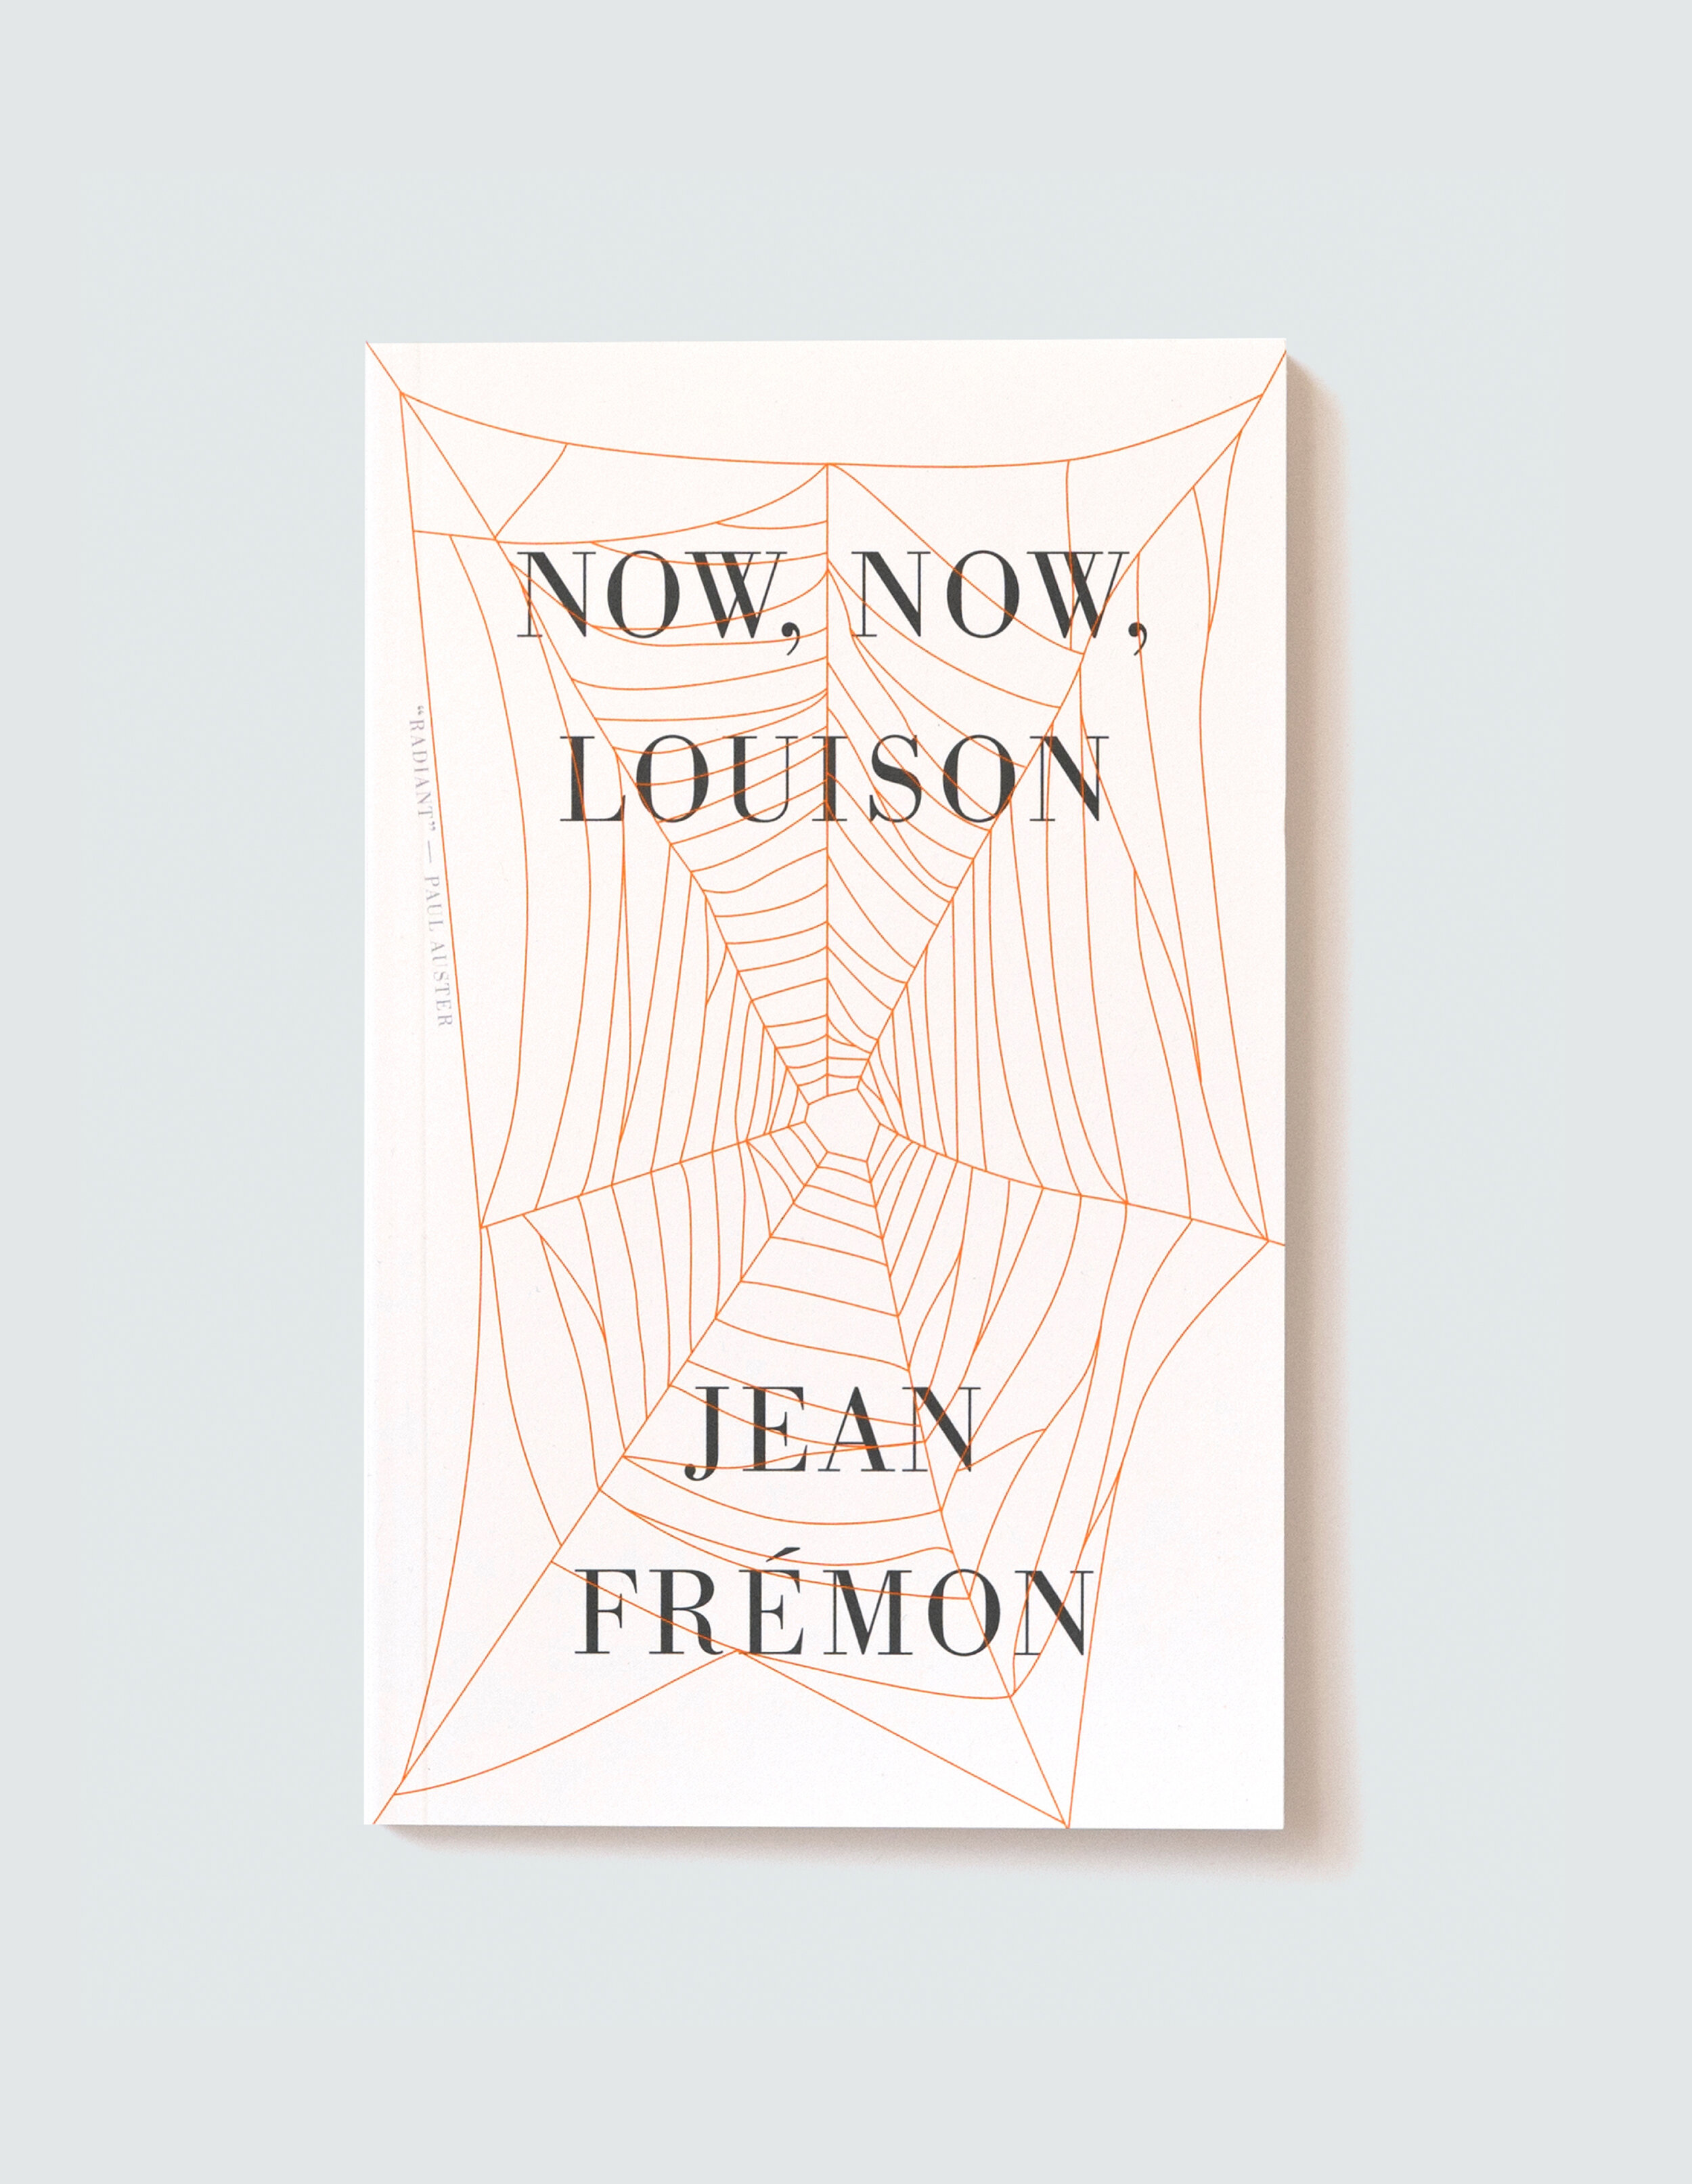 JEAN FRÉMON. NEW DIRECTIONS, 2019.